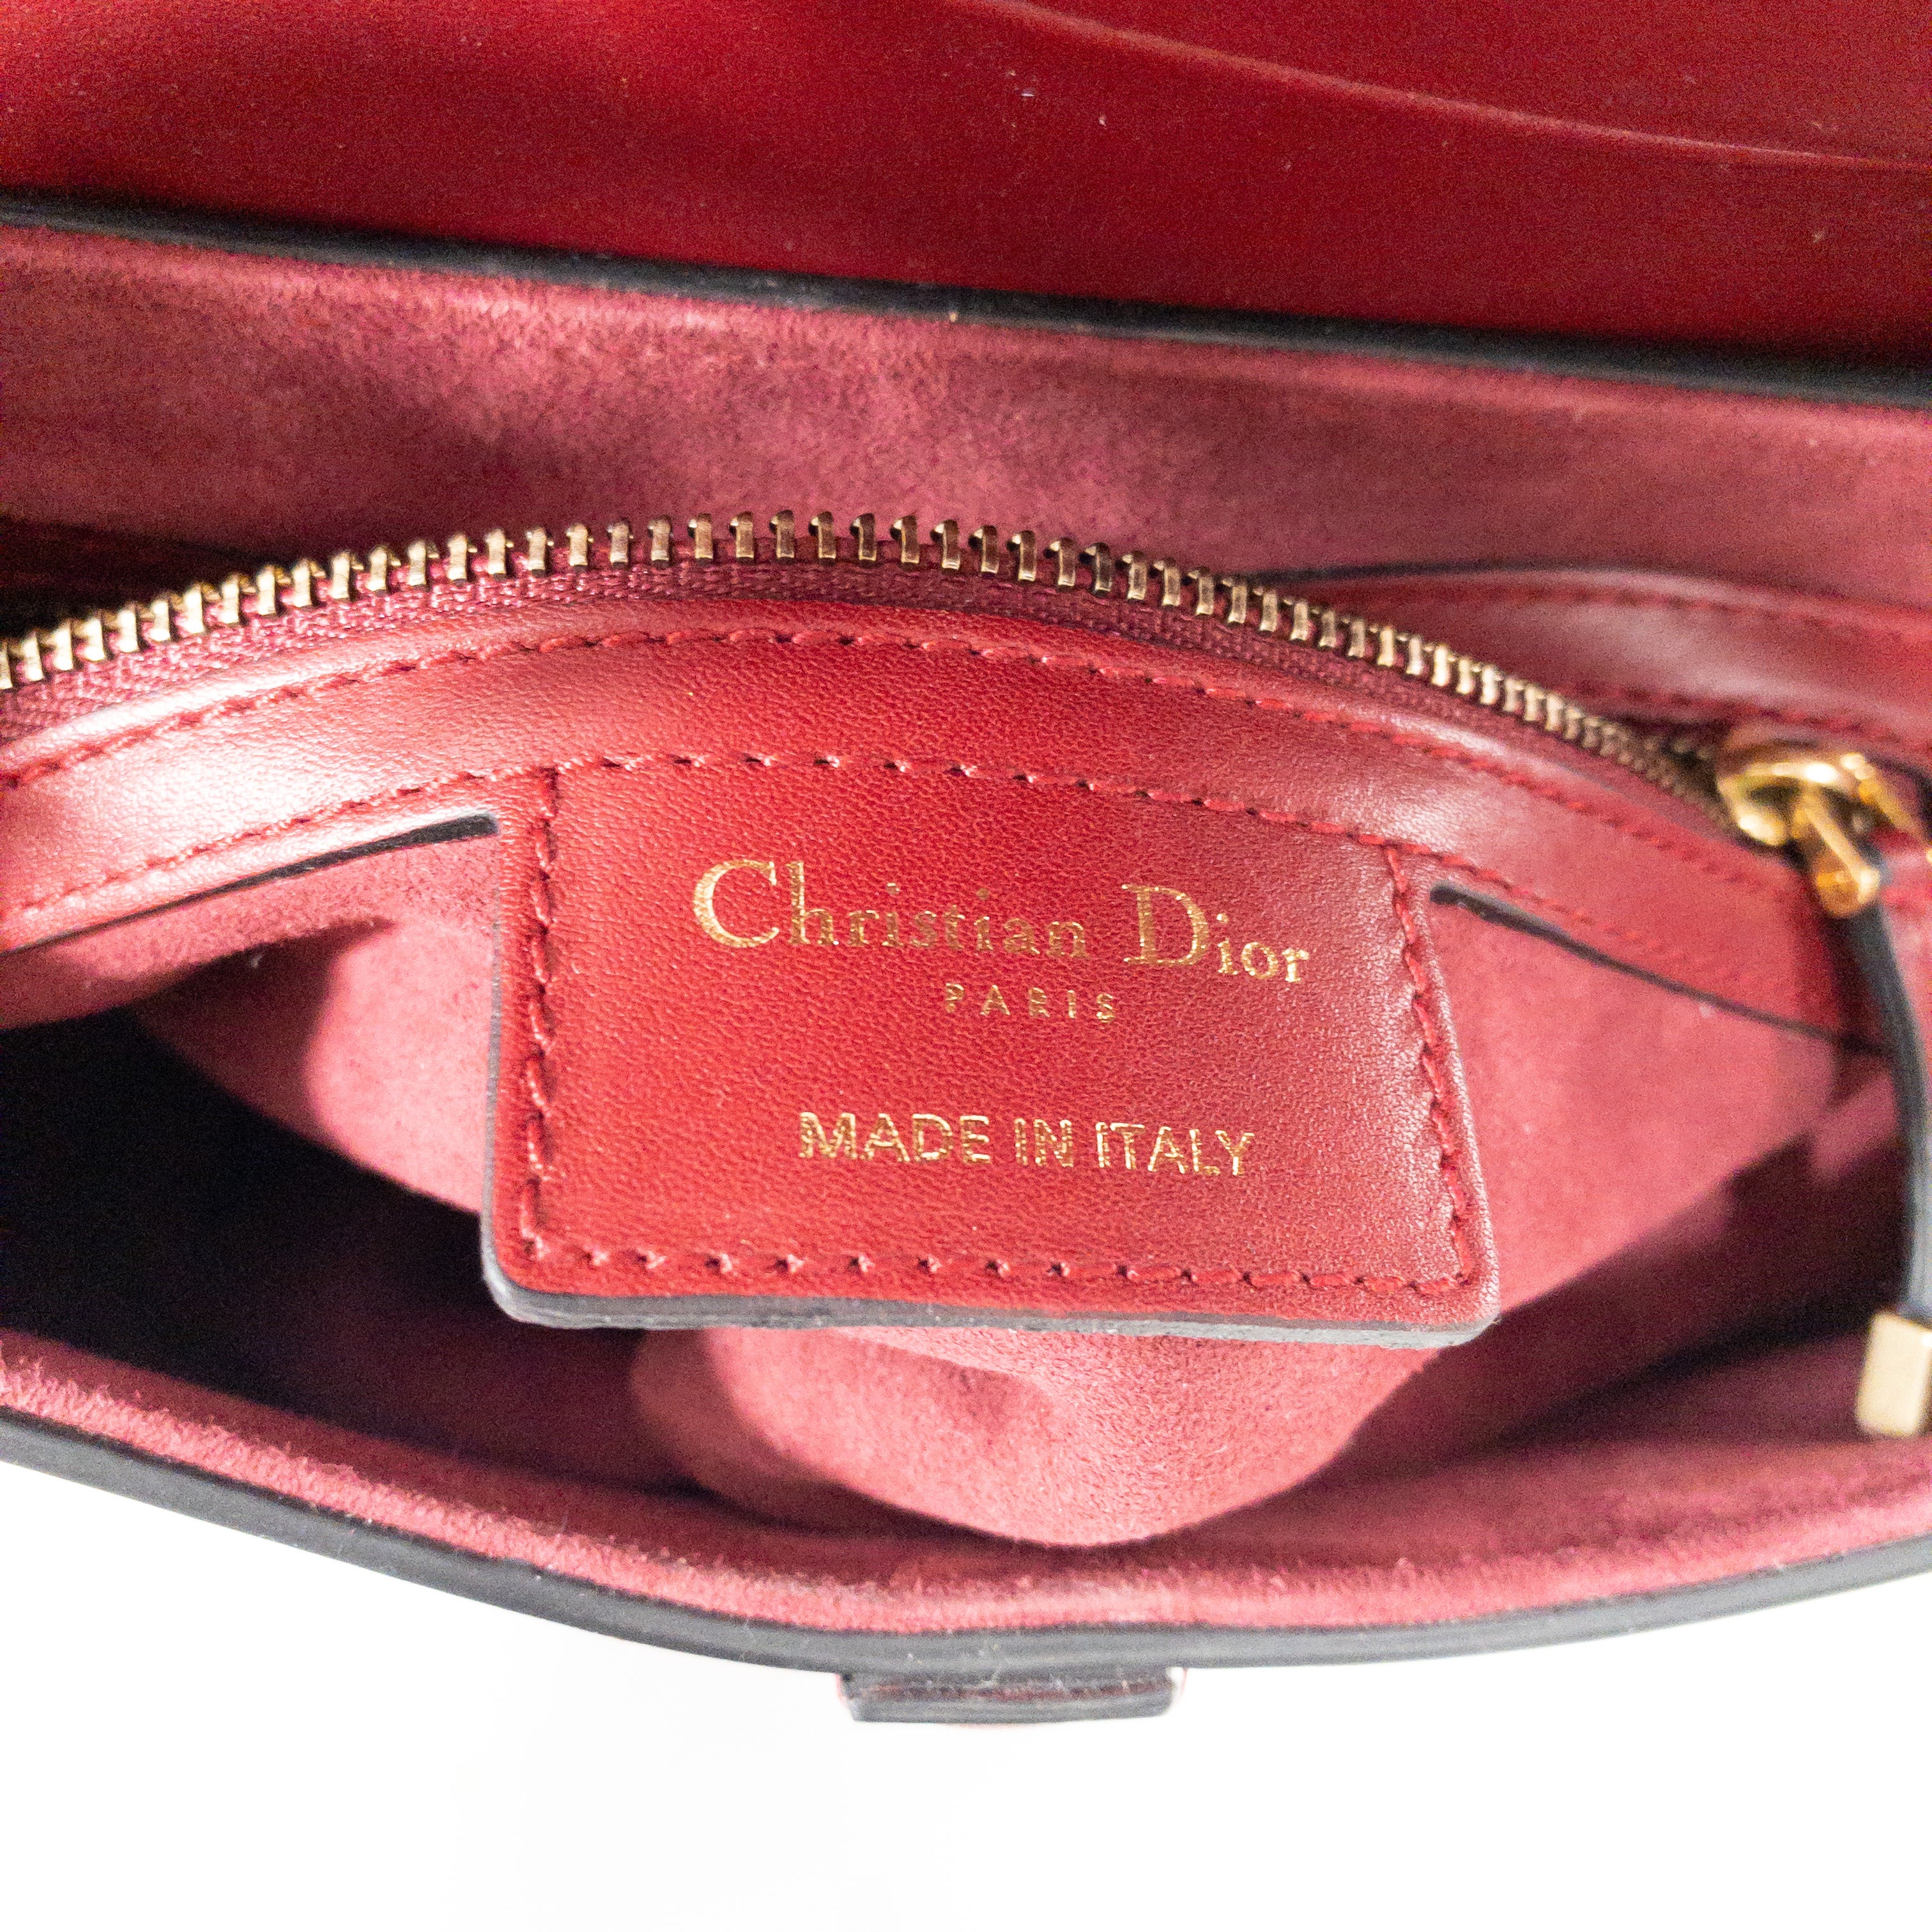 Dior Leather Medium Saddle Bag